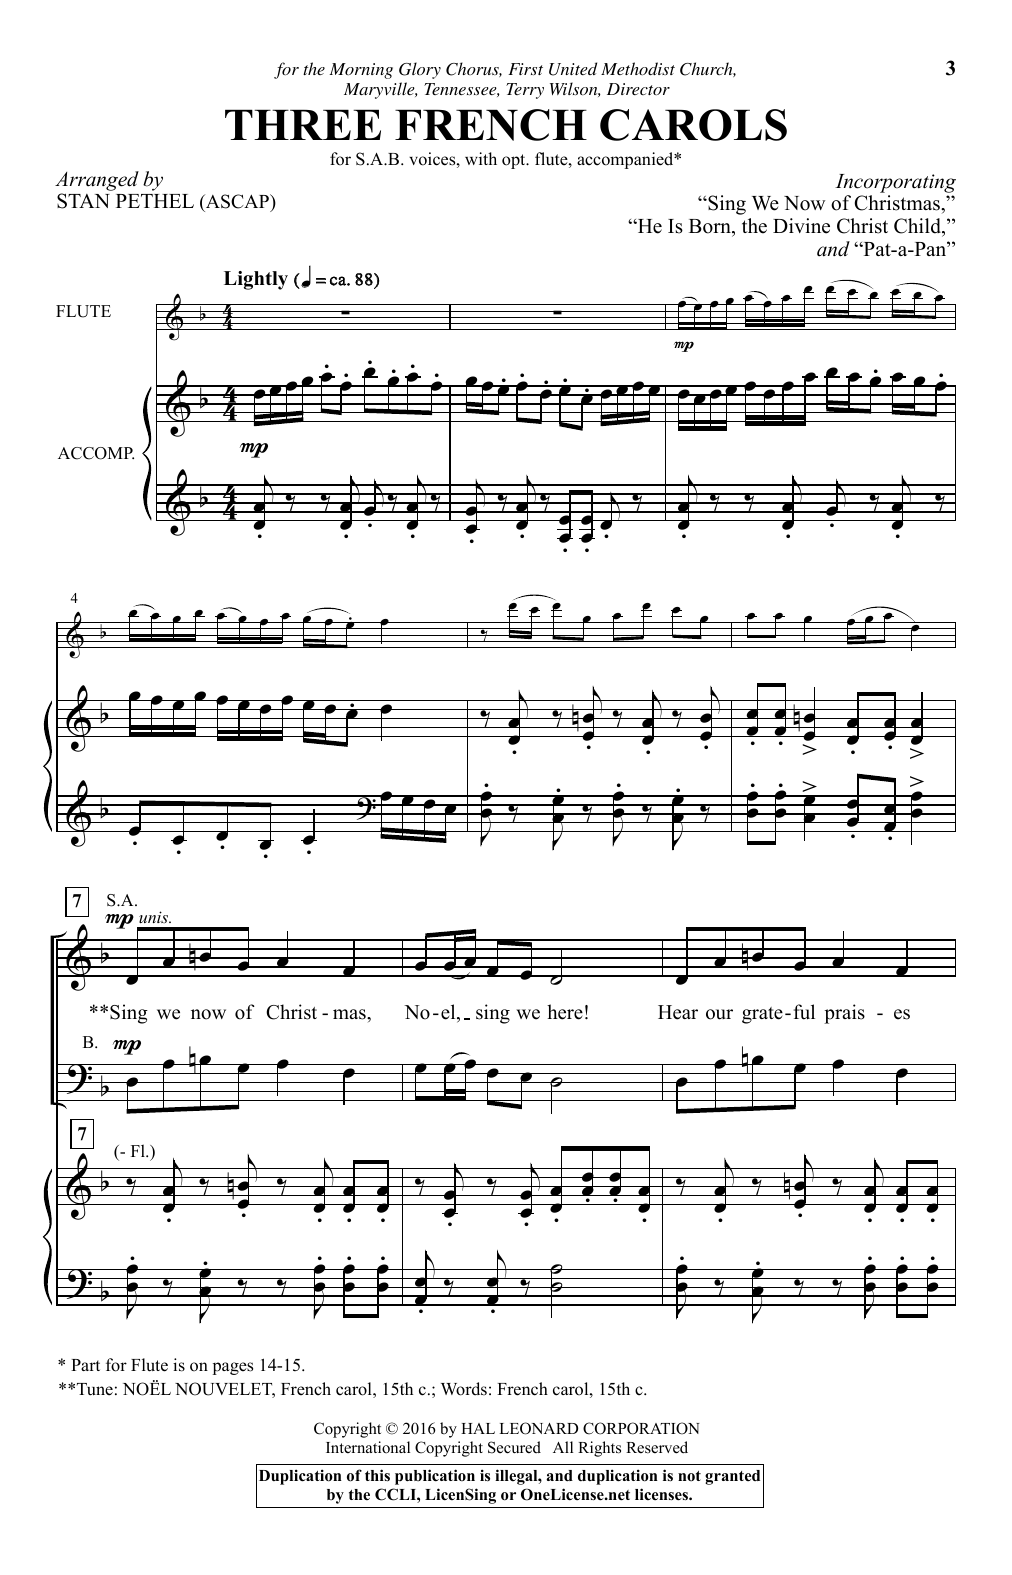 Stan Pethel Three French Carols Sheet Music Notes & Chords for Choral - Download or Print PDF